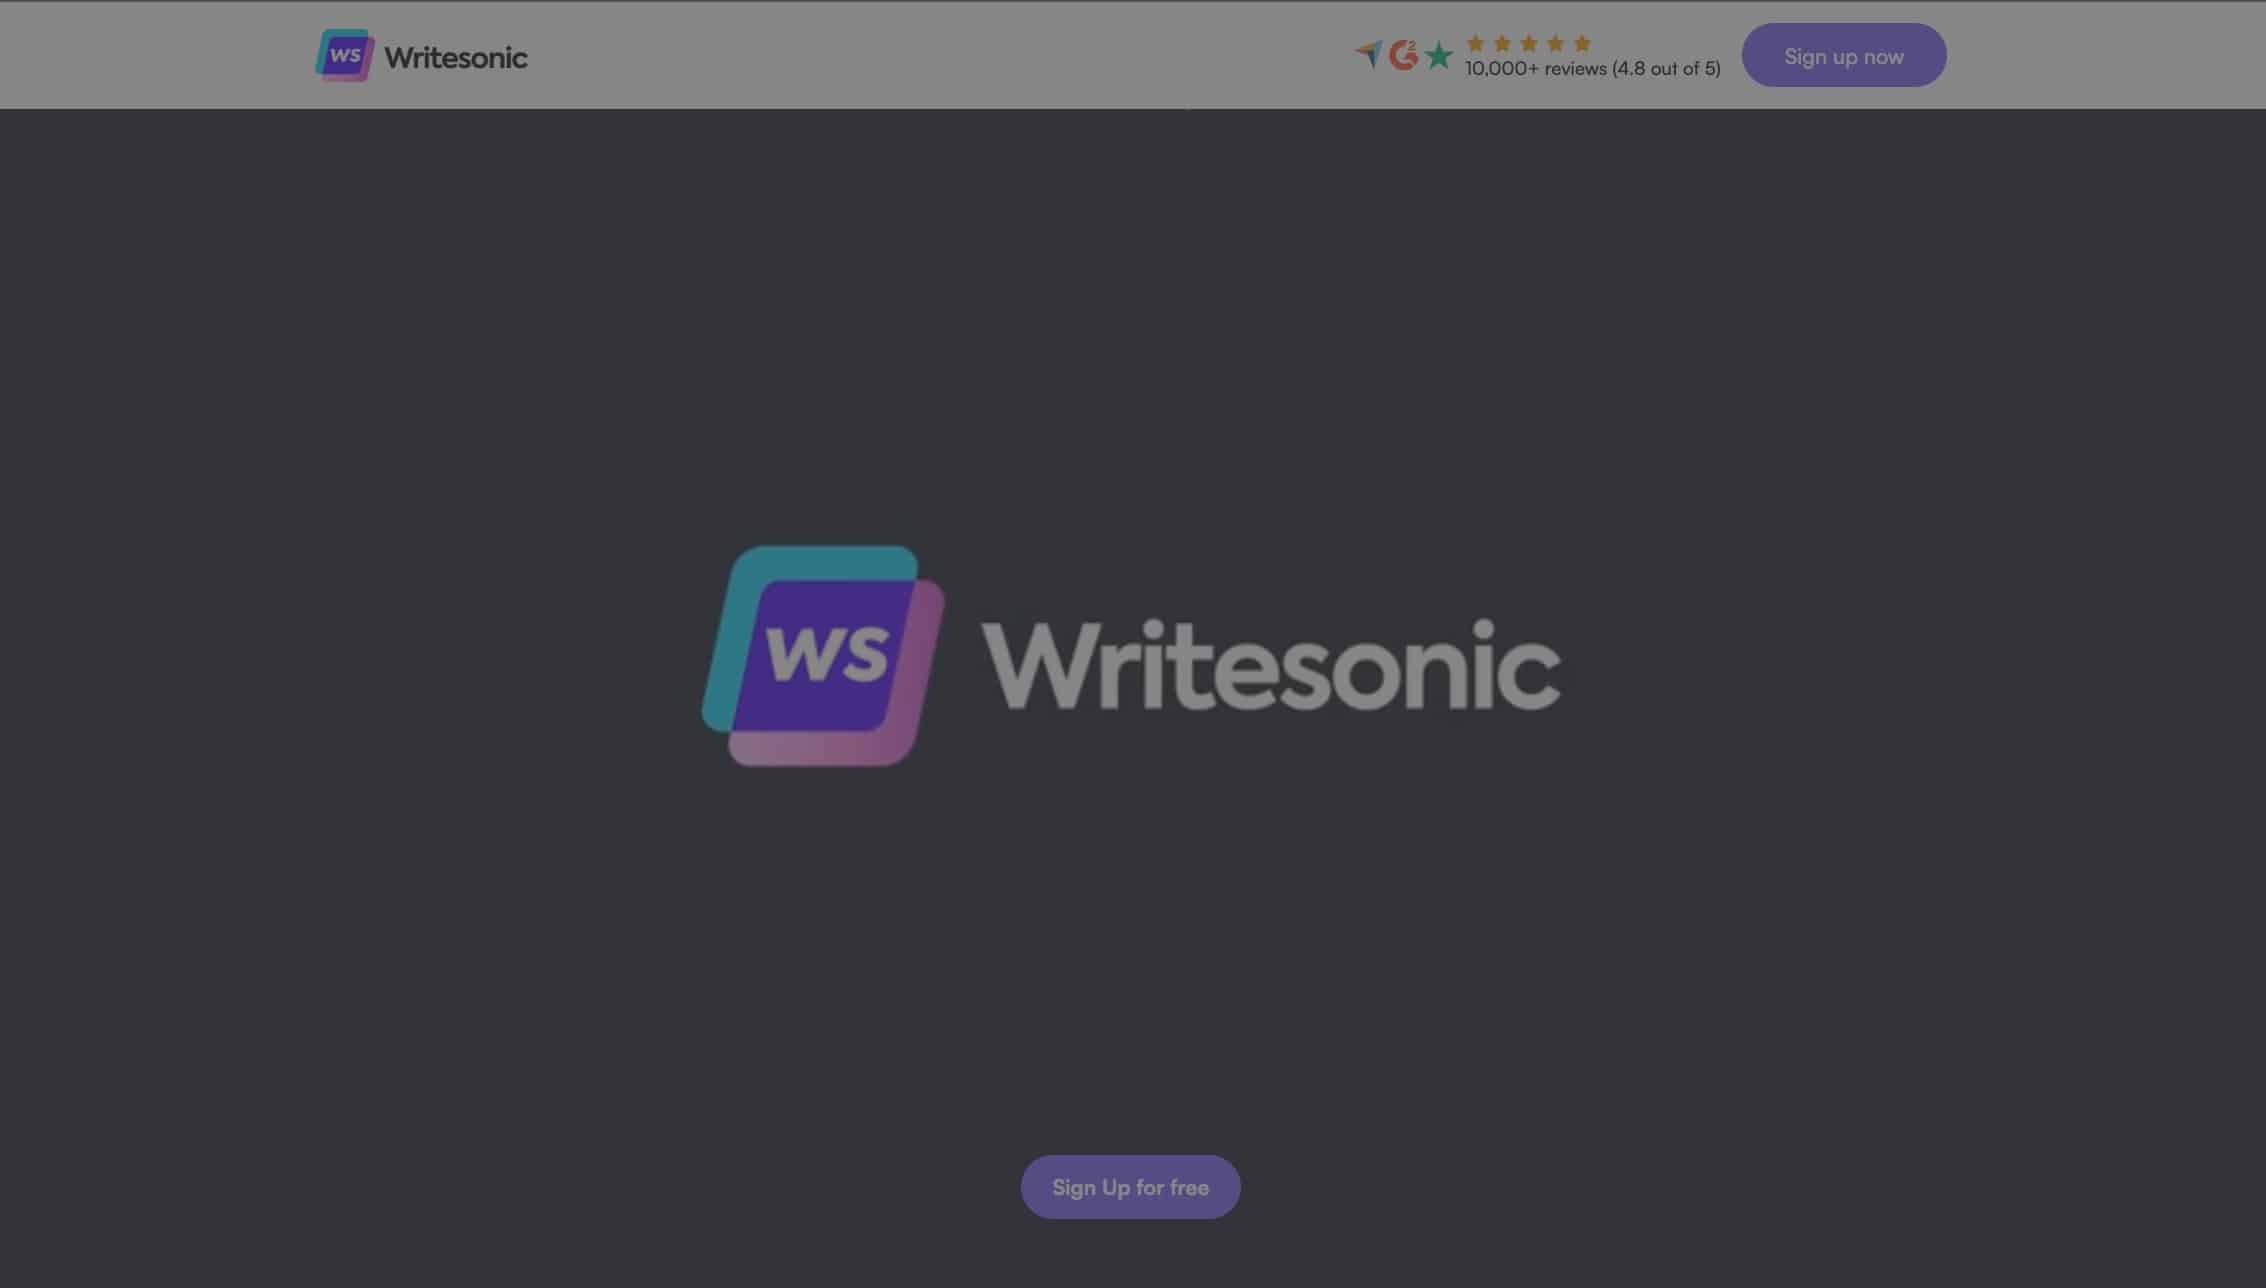 Writesonic featured